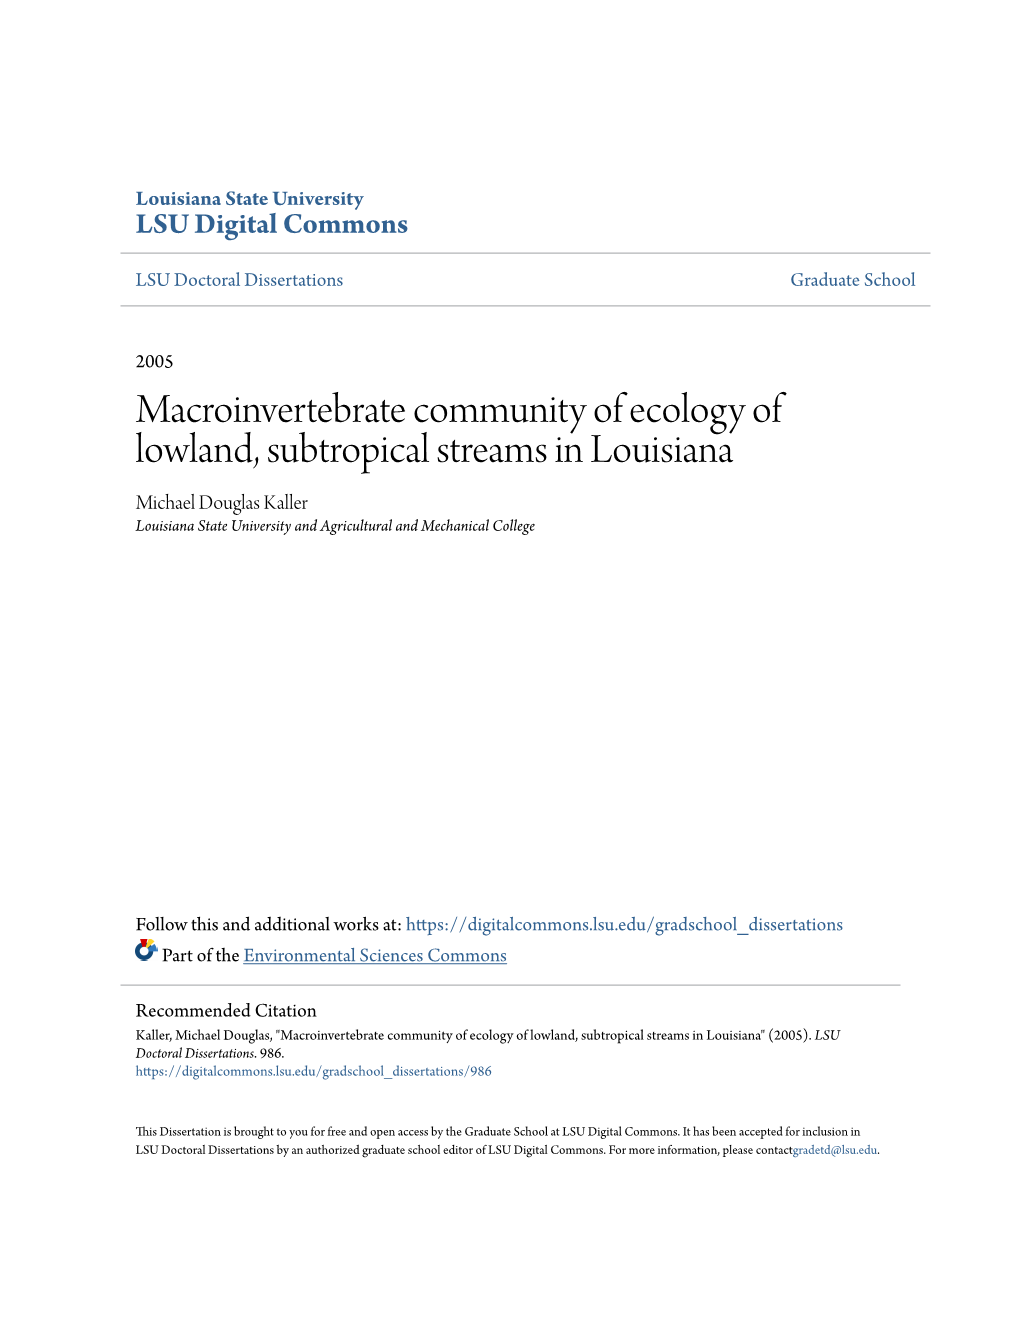 Macroinvertebrate Community of Ecology of Lowland, Subtropical Streams in Louisiana